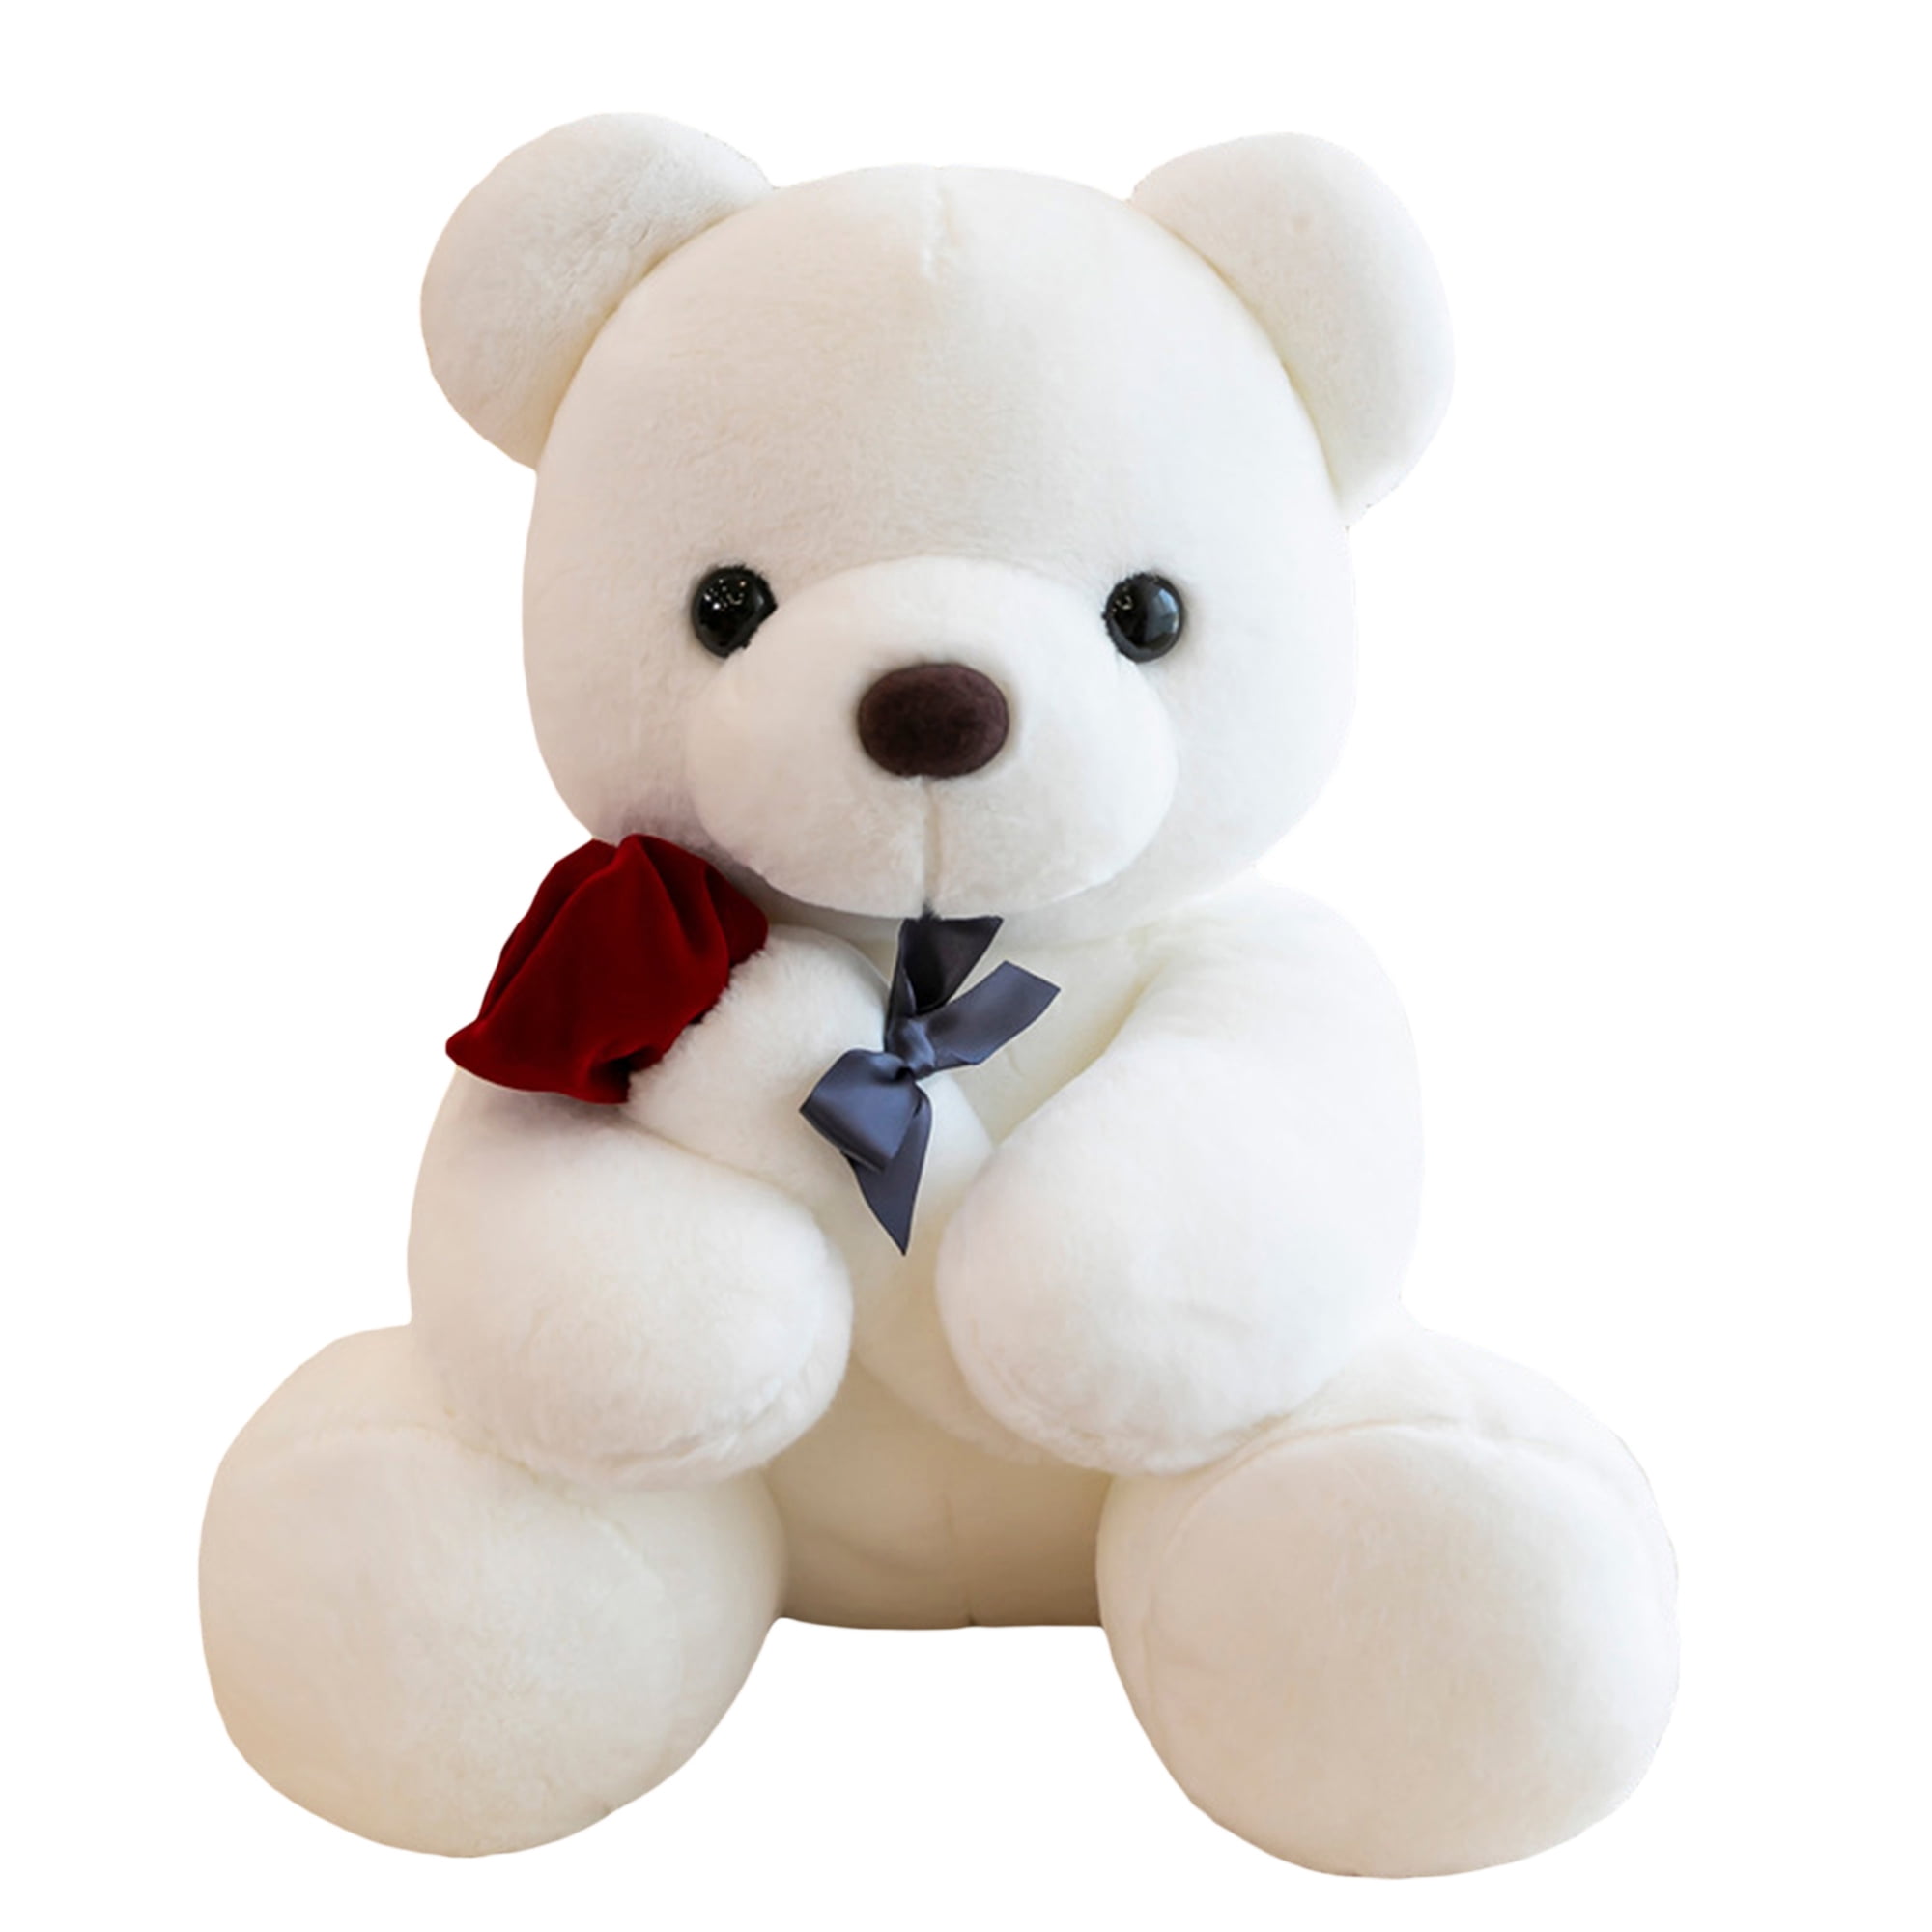 12 Pcs Bear Stuffed Animal Bear Plush Toys 9.84 Inch White Bear with Heart  Sweater Soft Cute Animals…See more 12 Pcs Bear Stuffed Animal Bear Plush